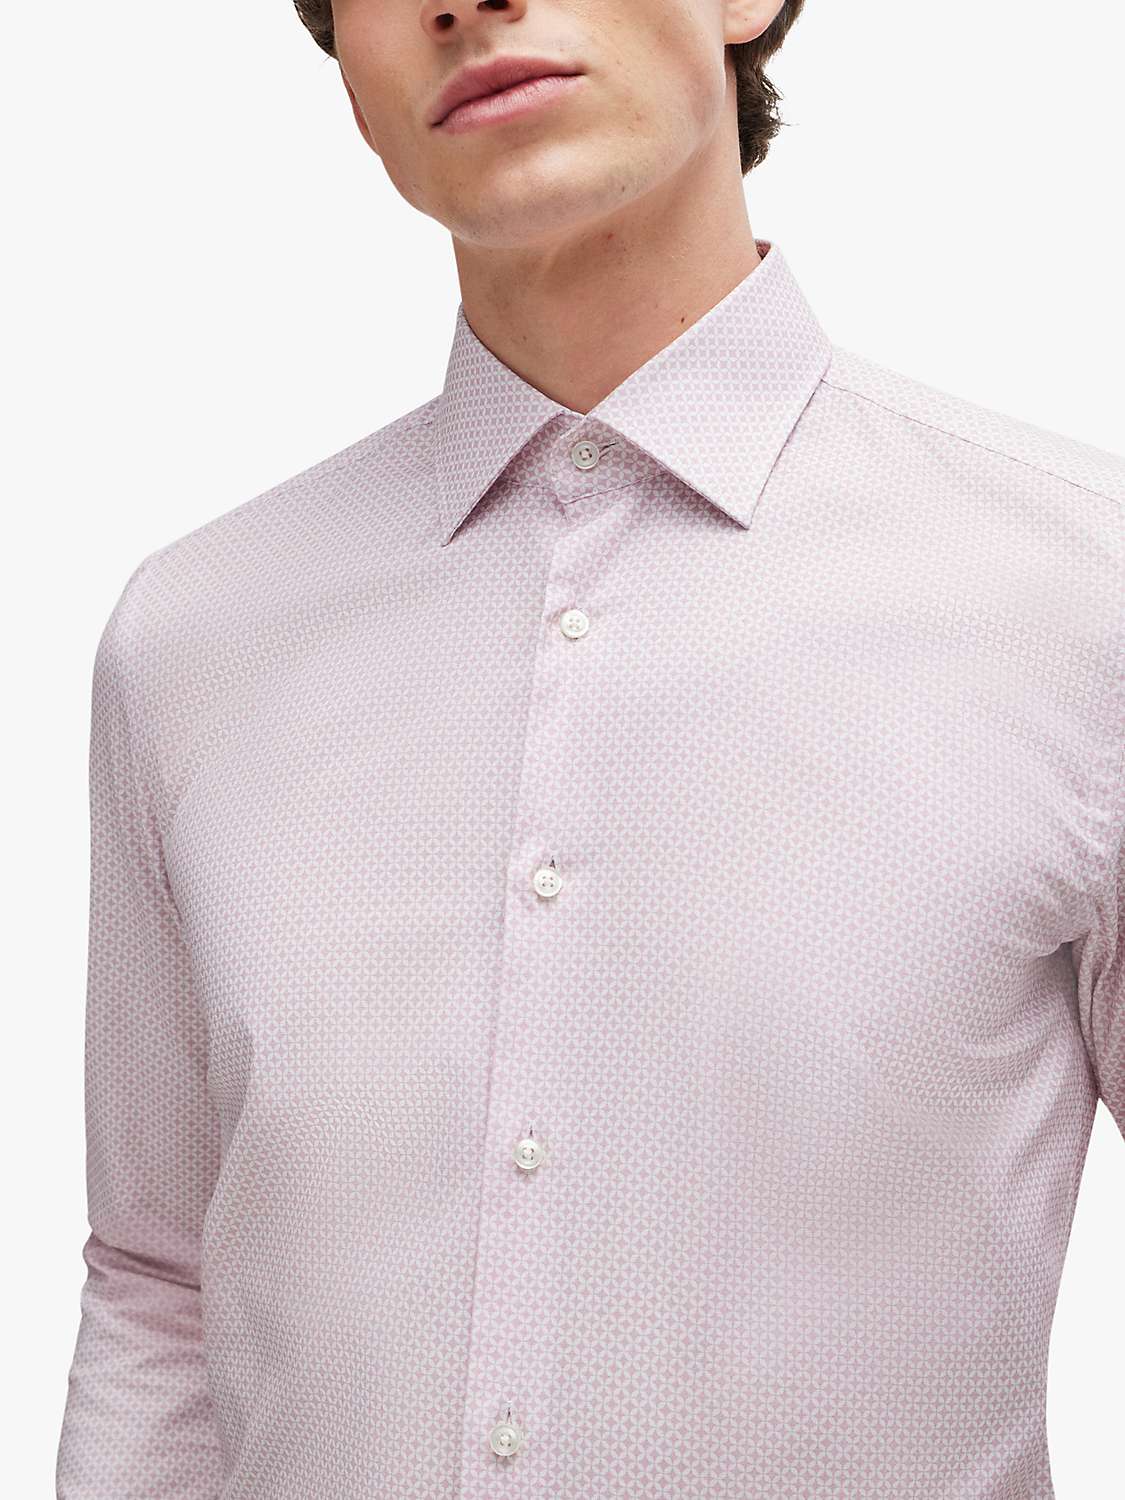 Buy BOSS Slim Fit Shirt, Light/Pastel Pink Online at johnlewis.com